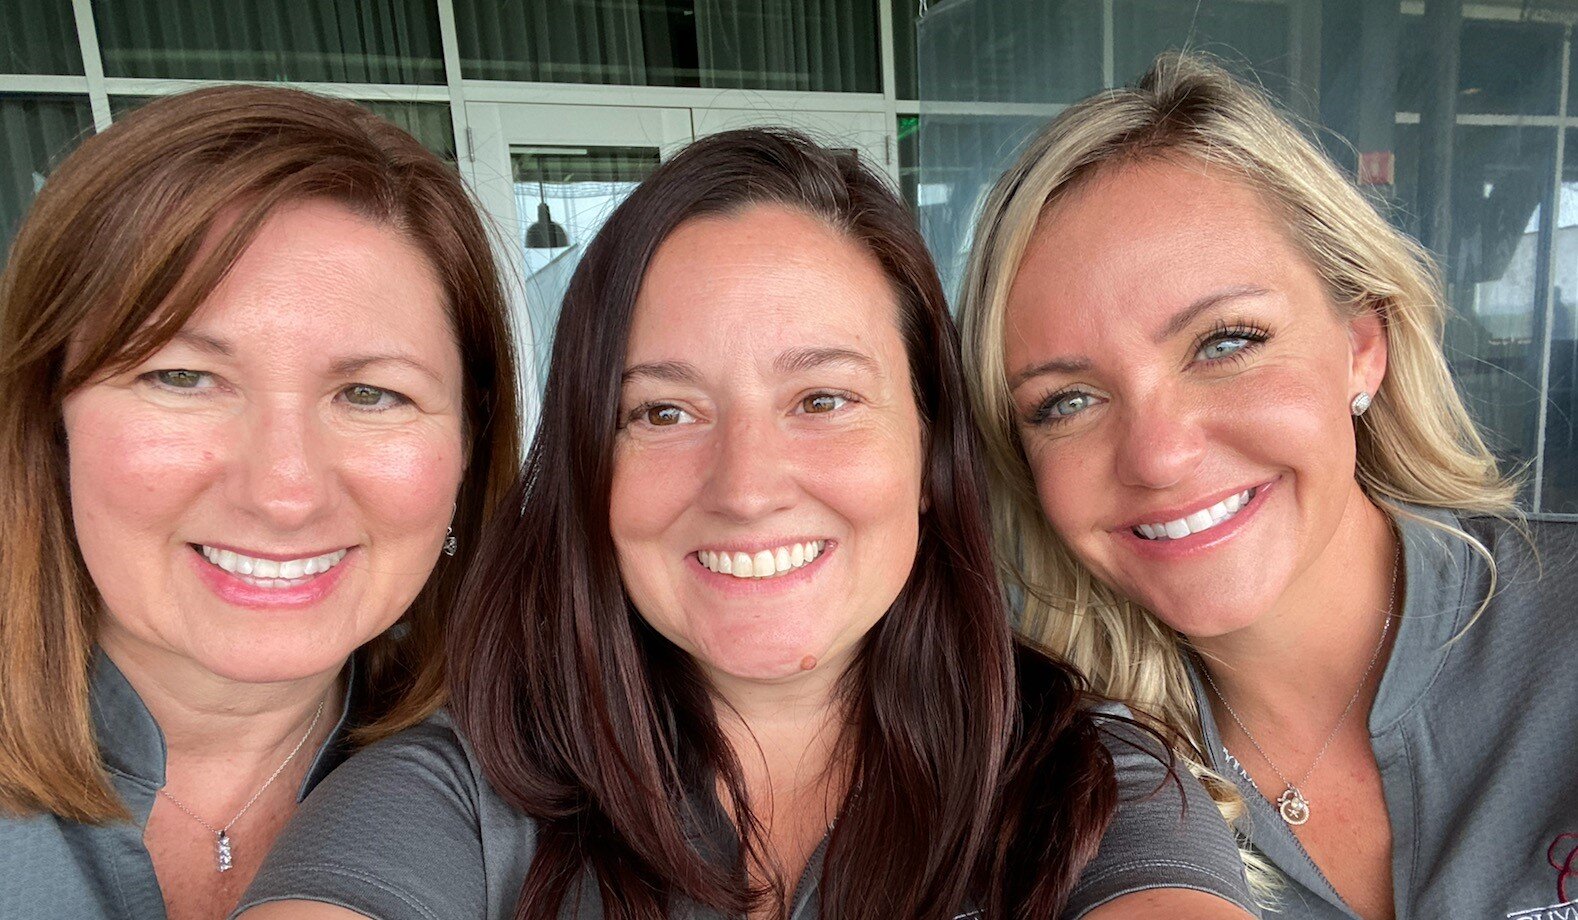 Iveta, Alison, and Amber at Teambuilding, September 2020